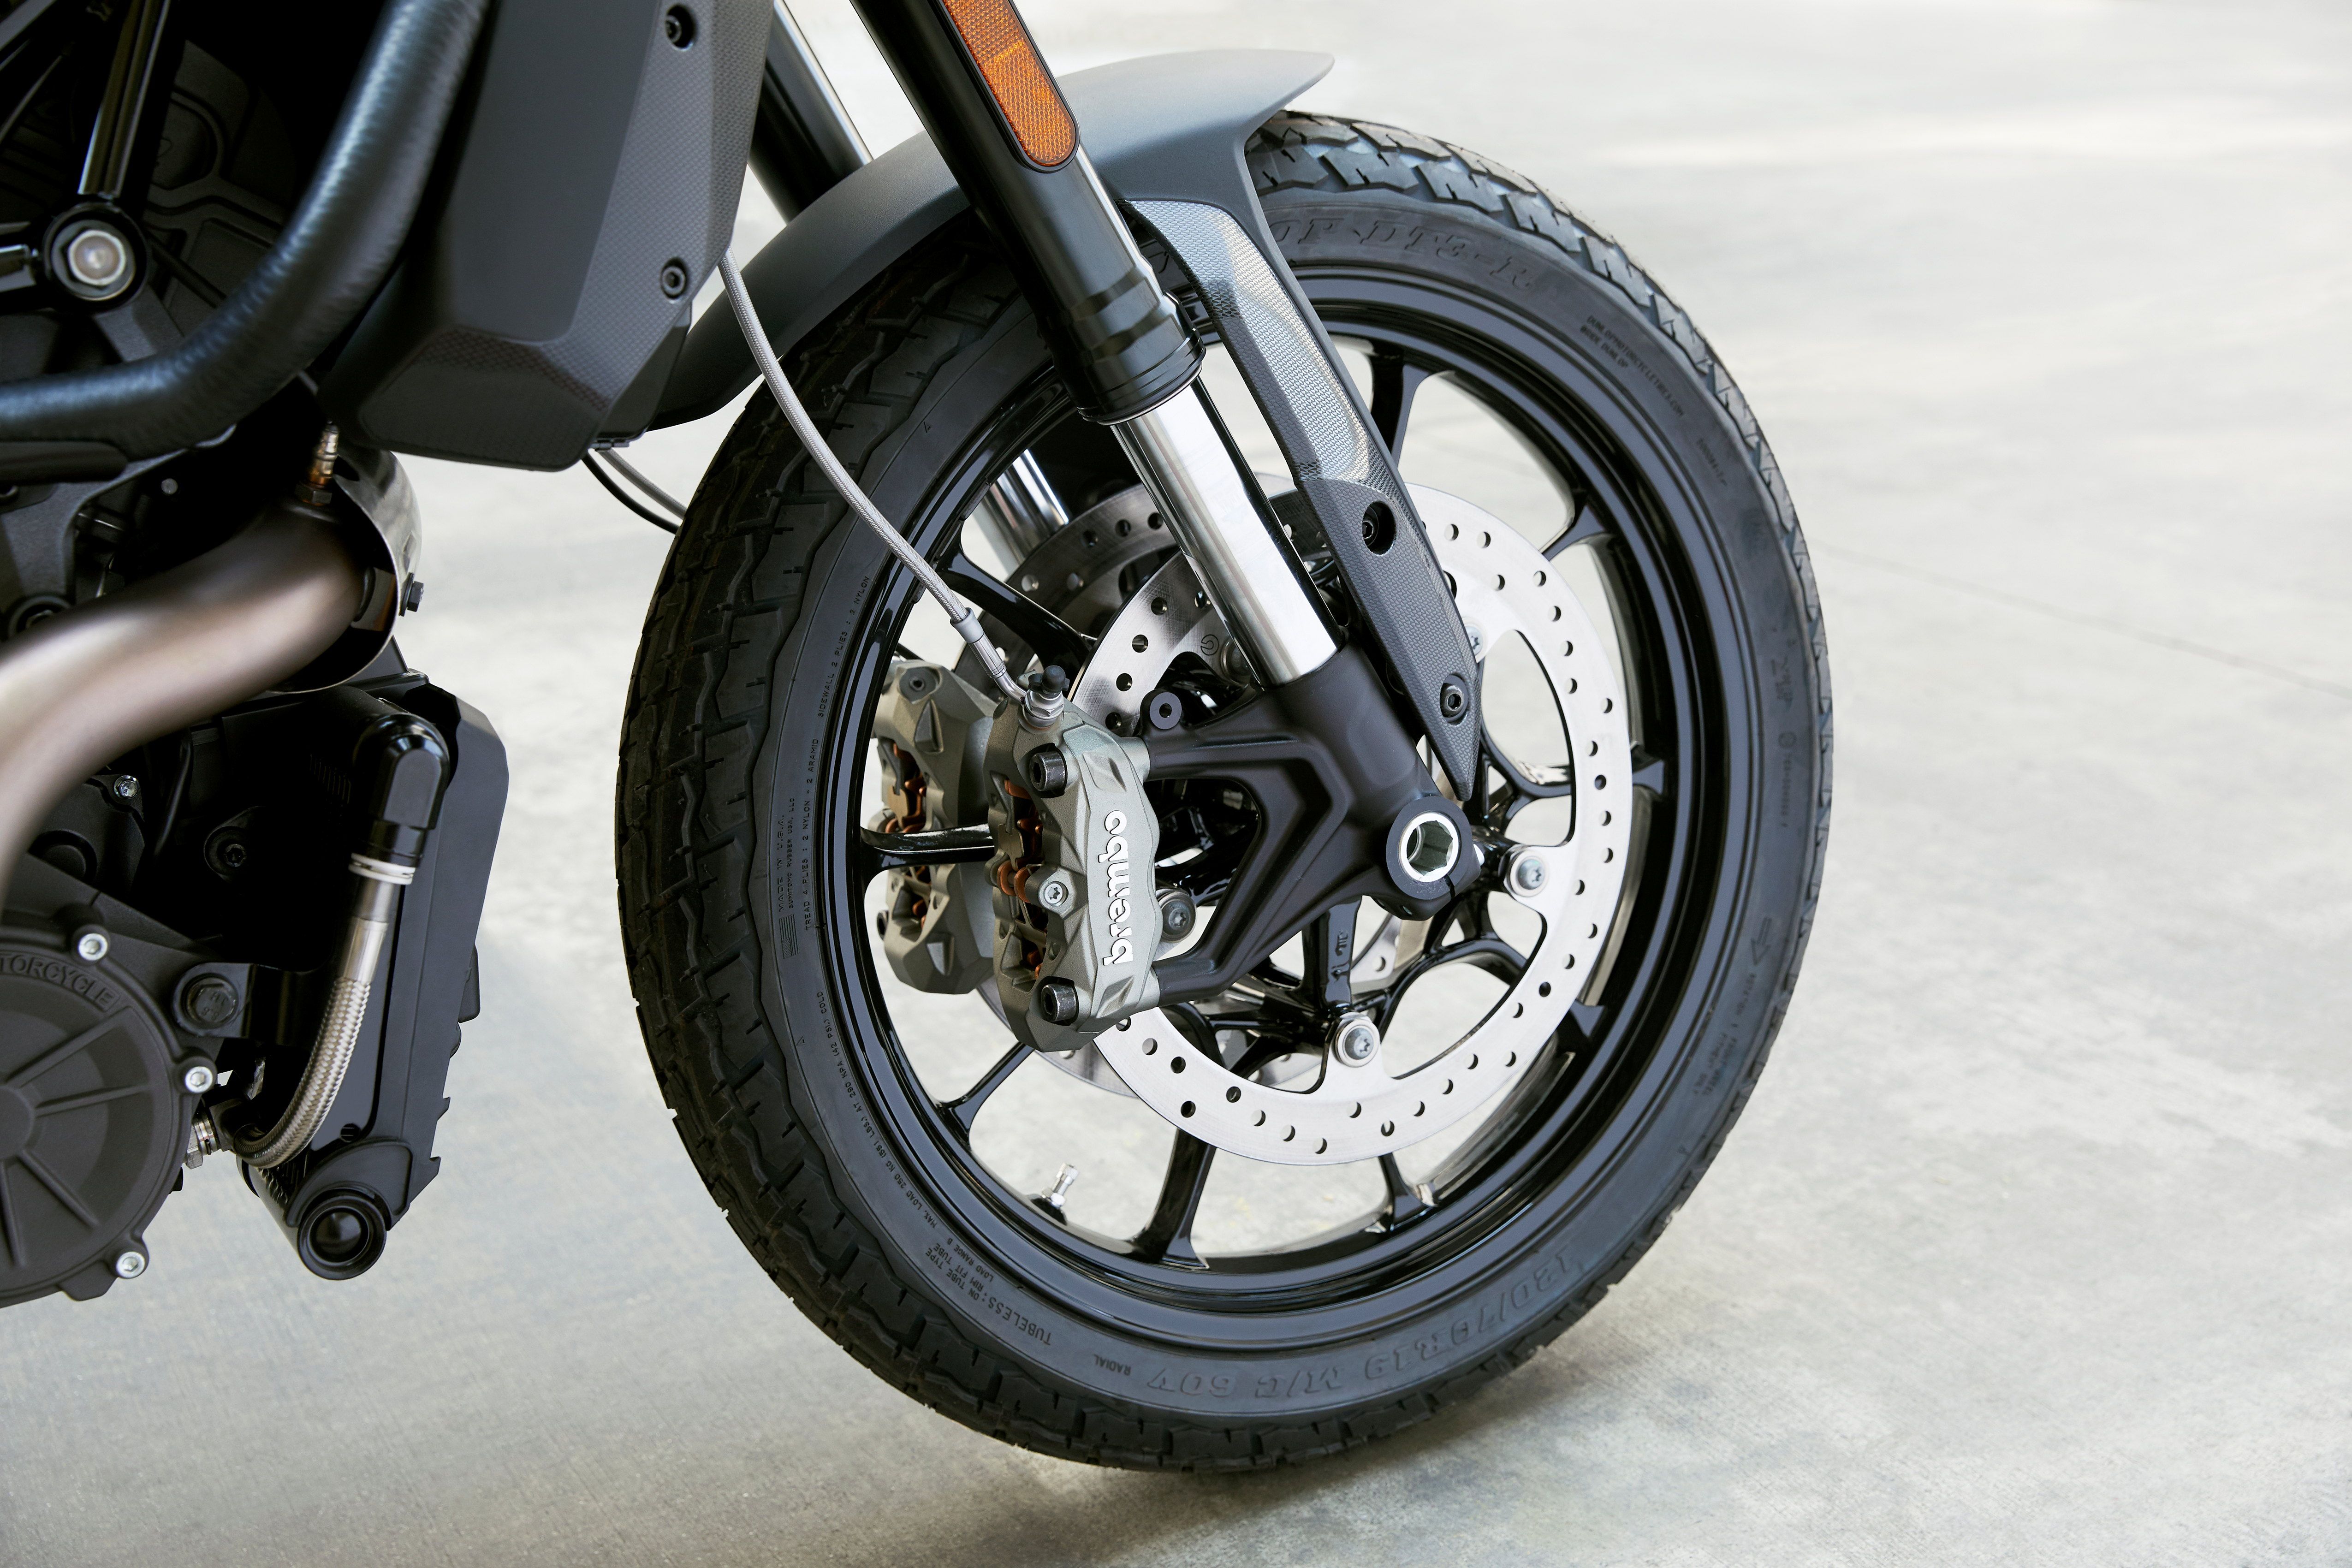 2019 - 2020 Indian Motorcycle  FTR 1200